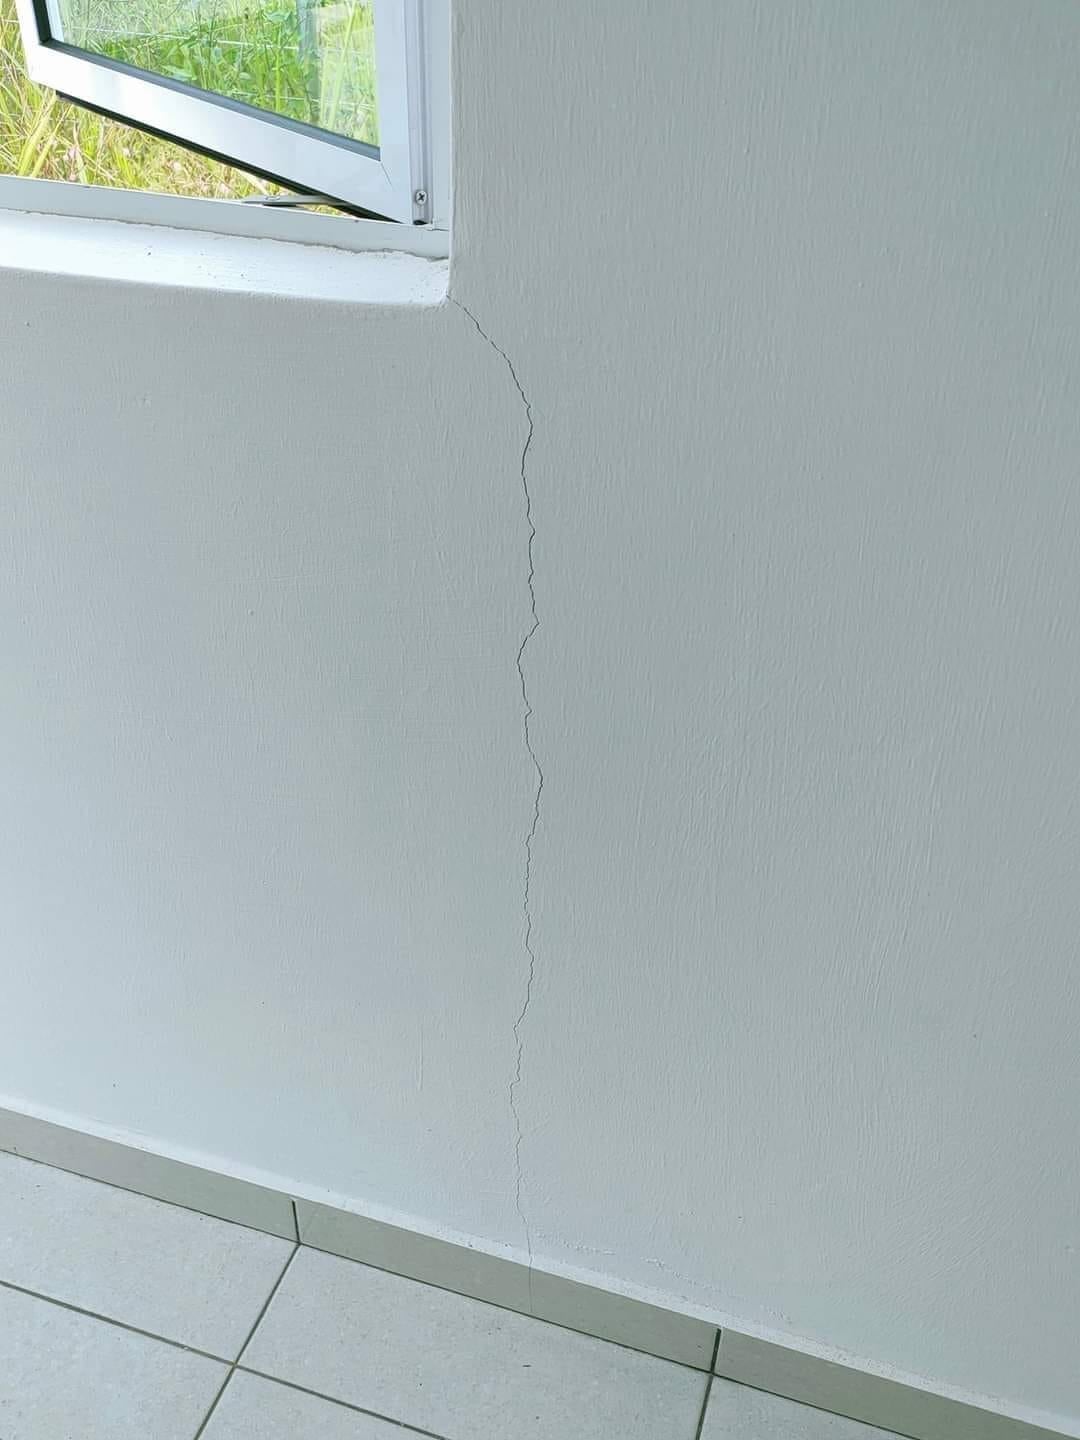 cracked walls